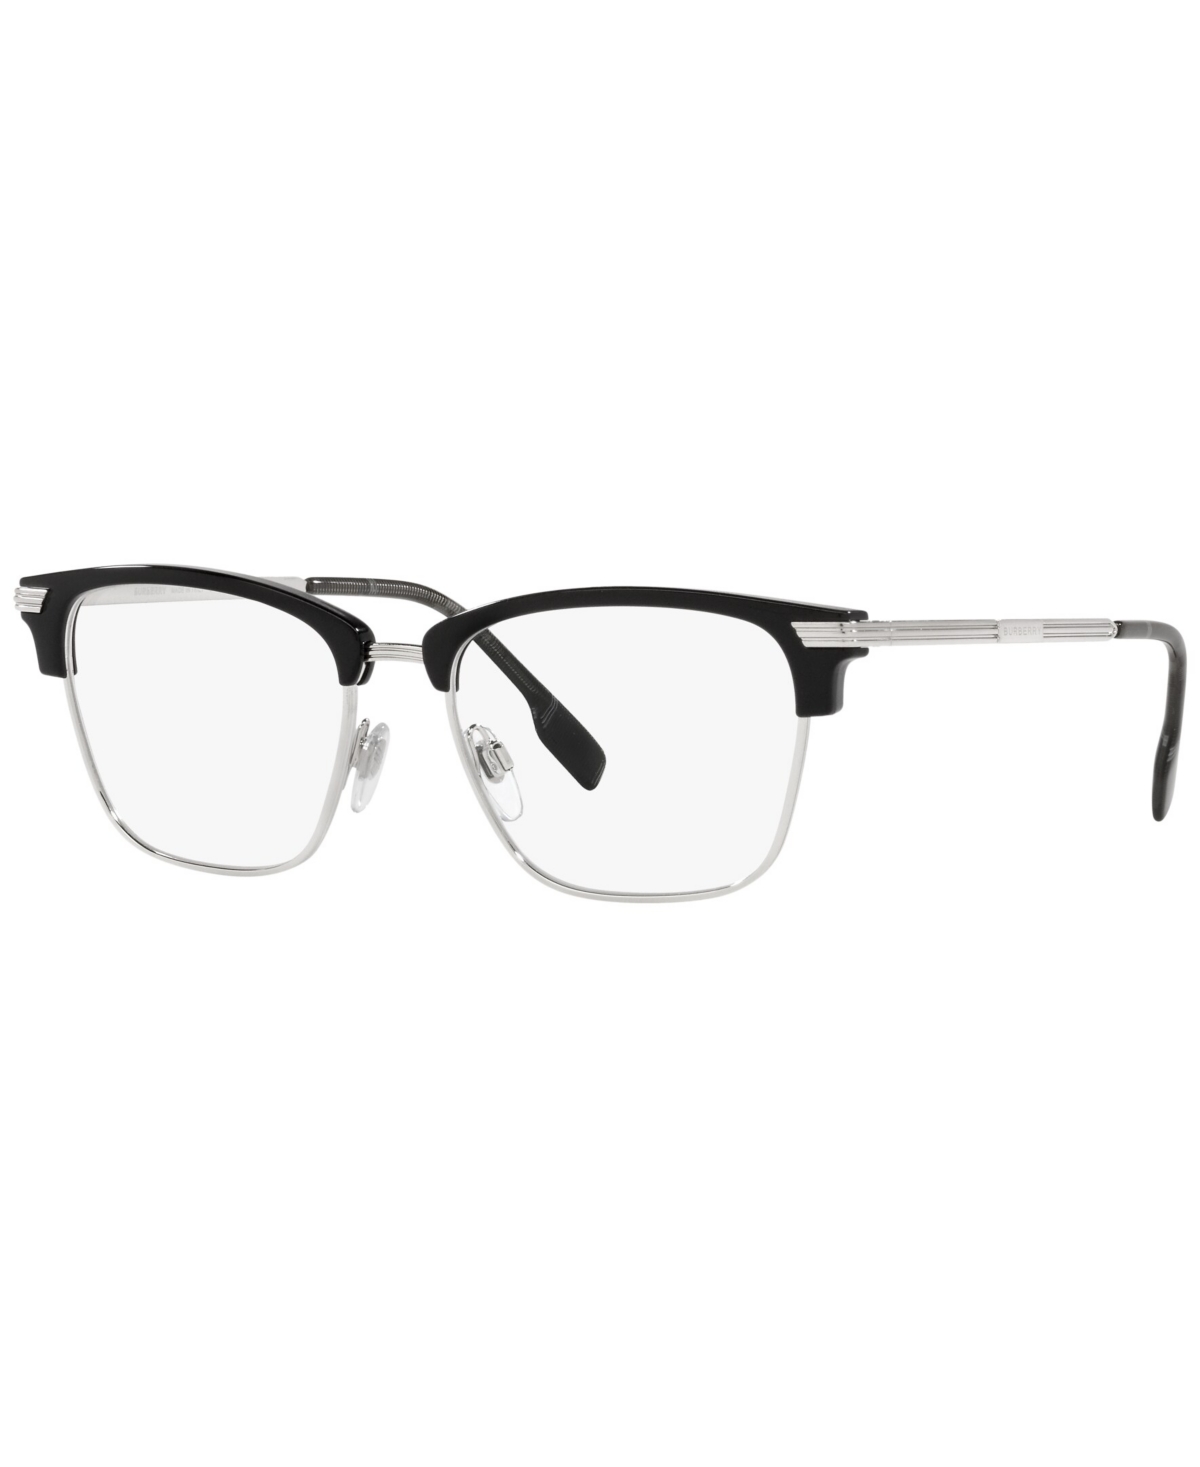 BE2359 Pearce Men's Square Eyeglasses - Black